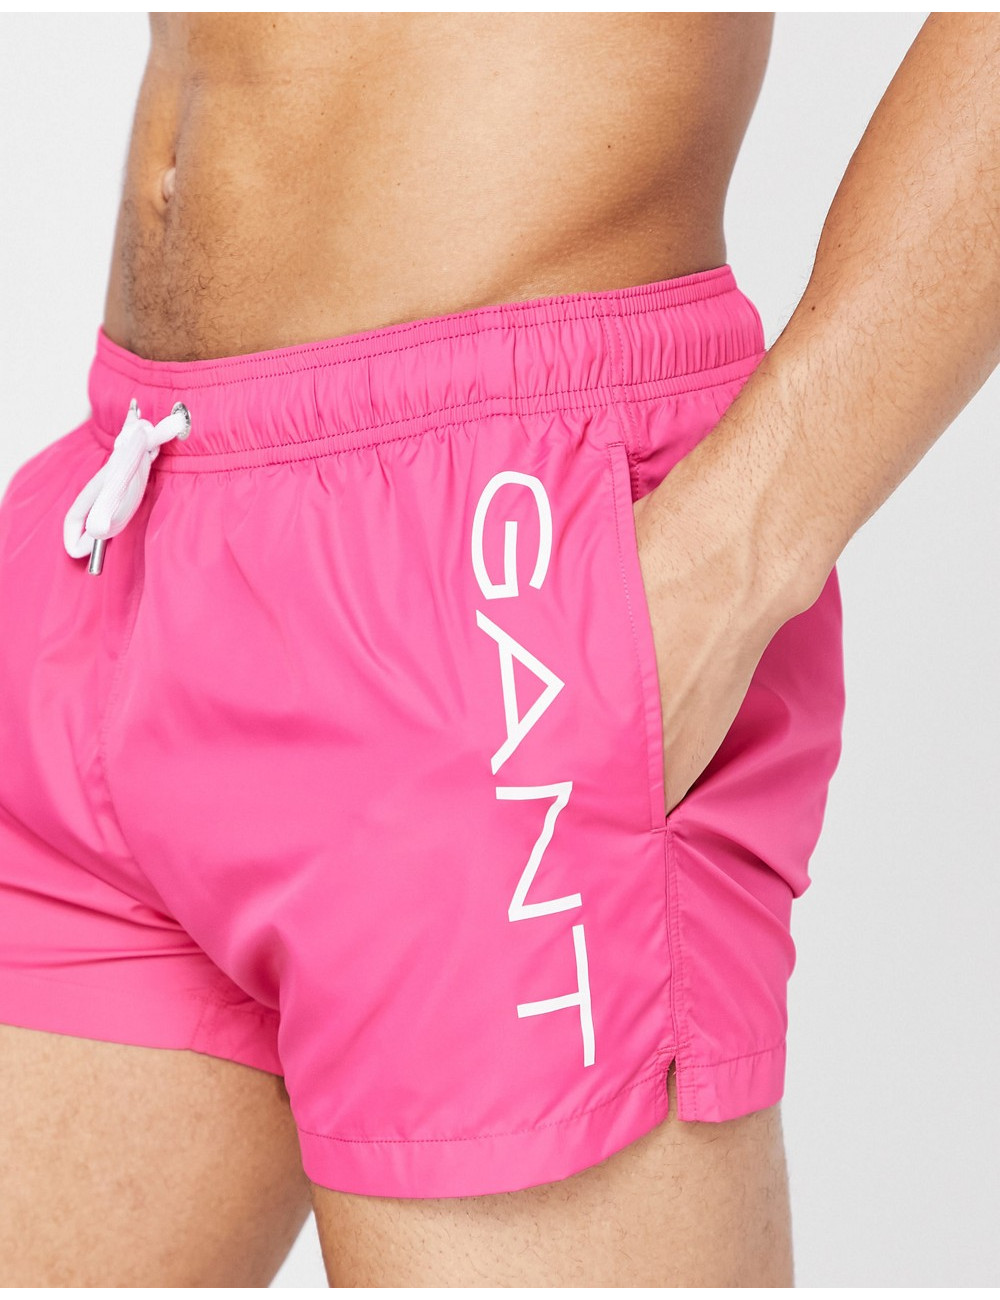 GANT swim shorts in pink...